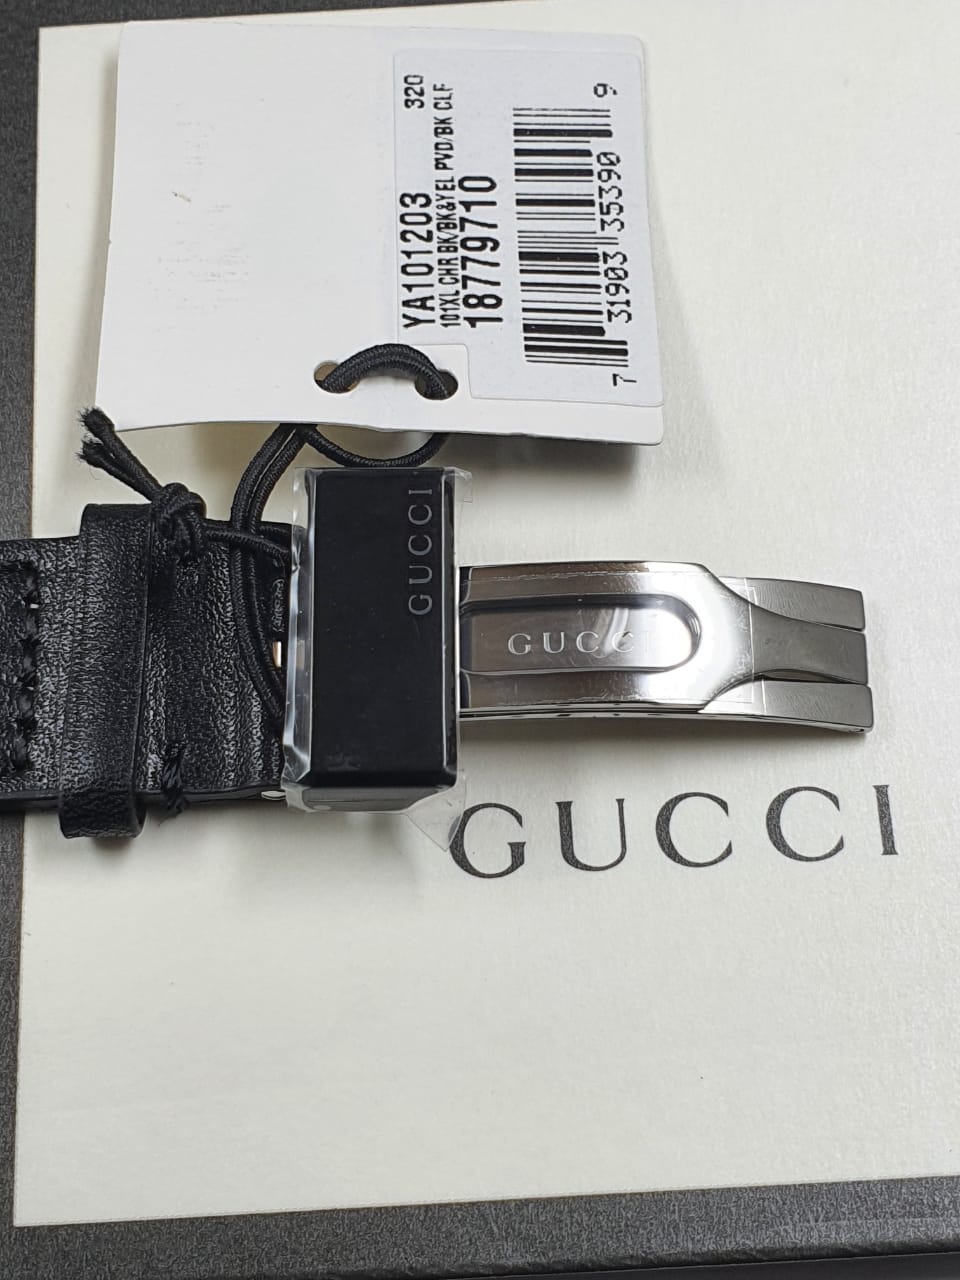 Gucci Men’s Analog Quartz Leather Strap Black Dial 44mm Watch YA101203